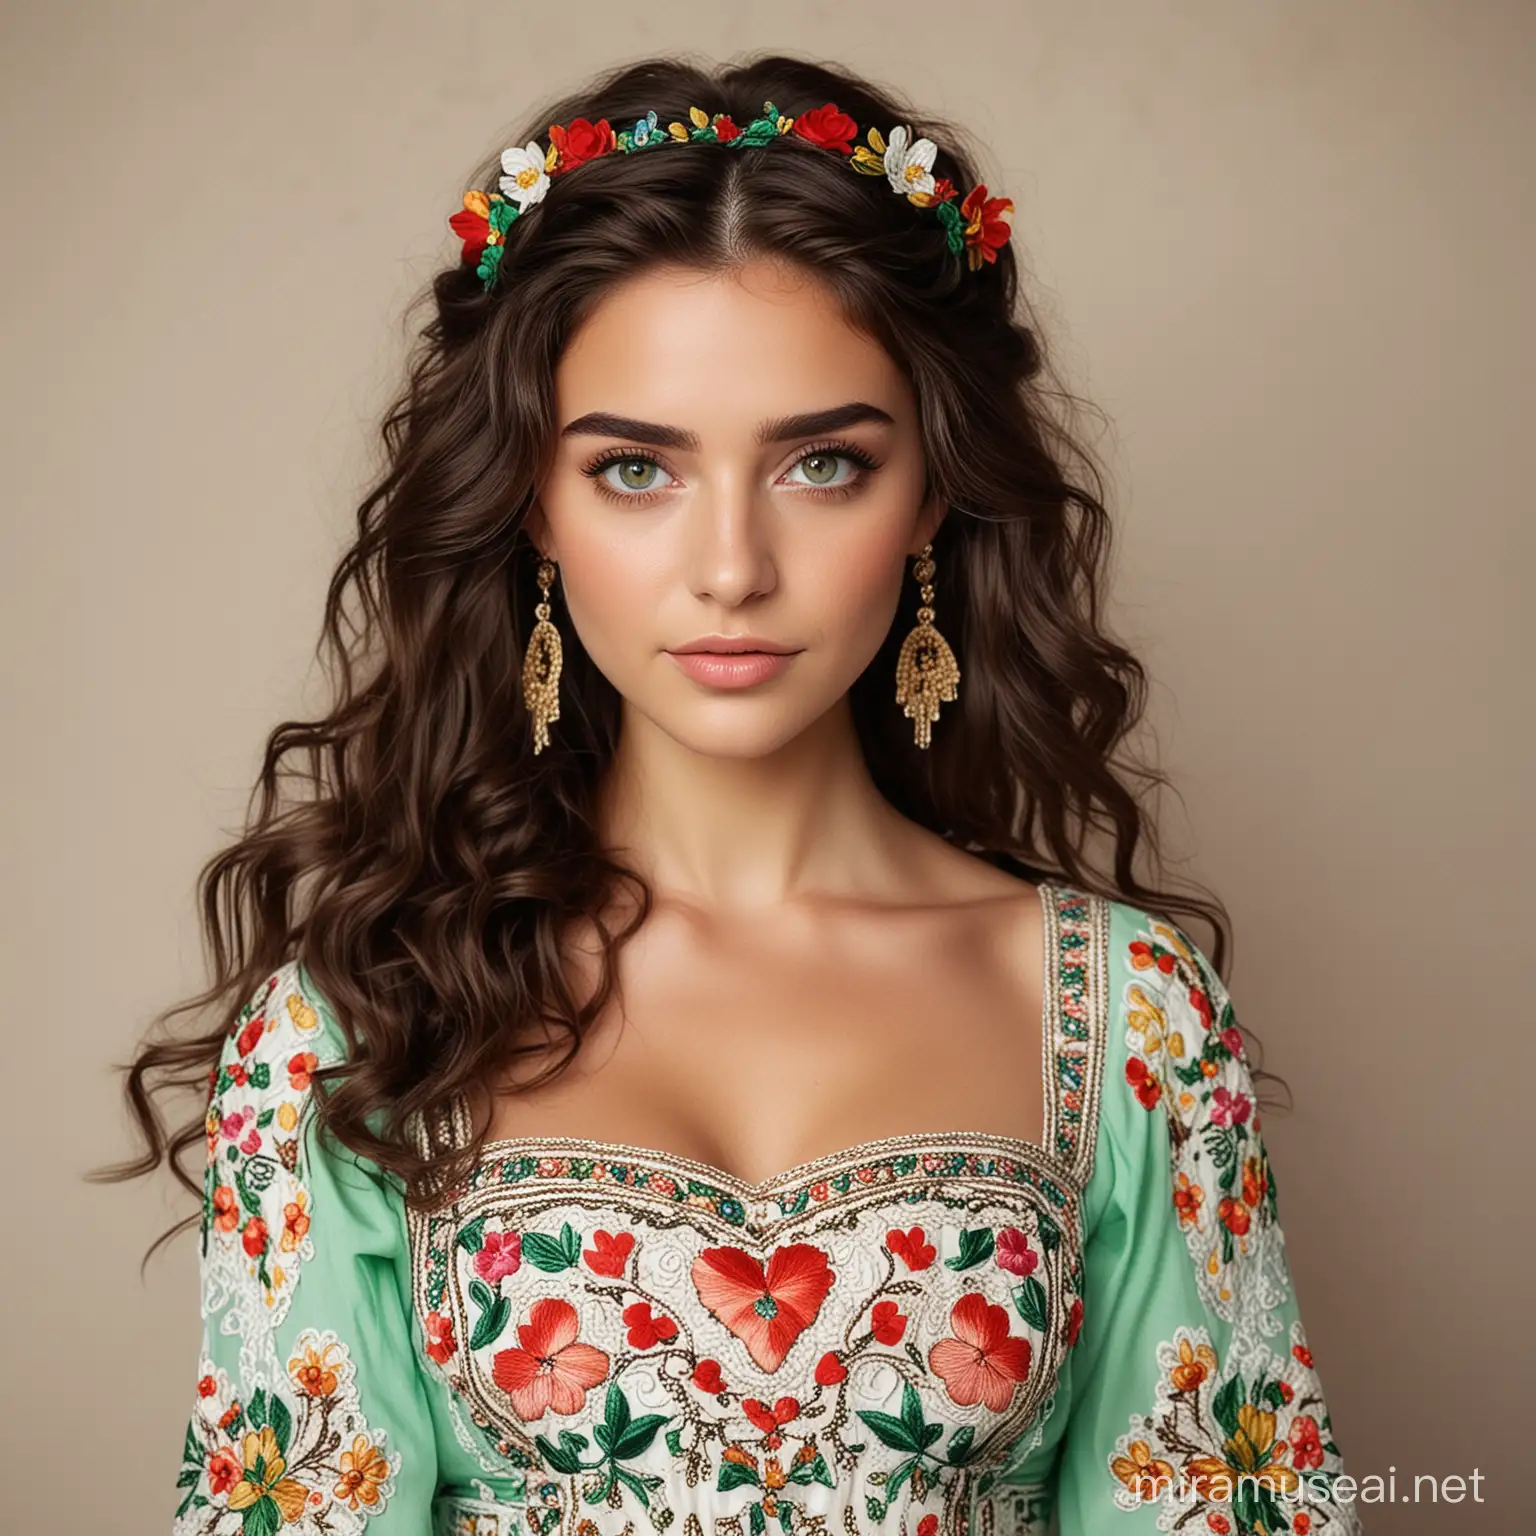 Beautiful Greek Goddess with Wavy Dark Brown Hair in Colorful Boho Dress